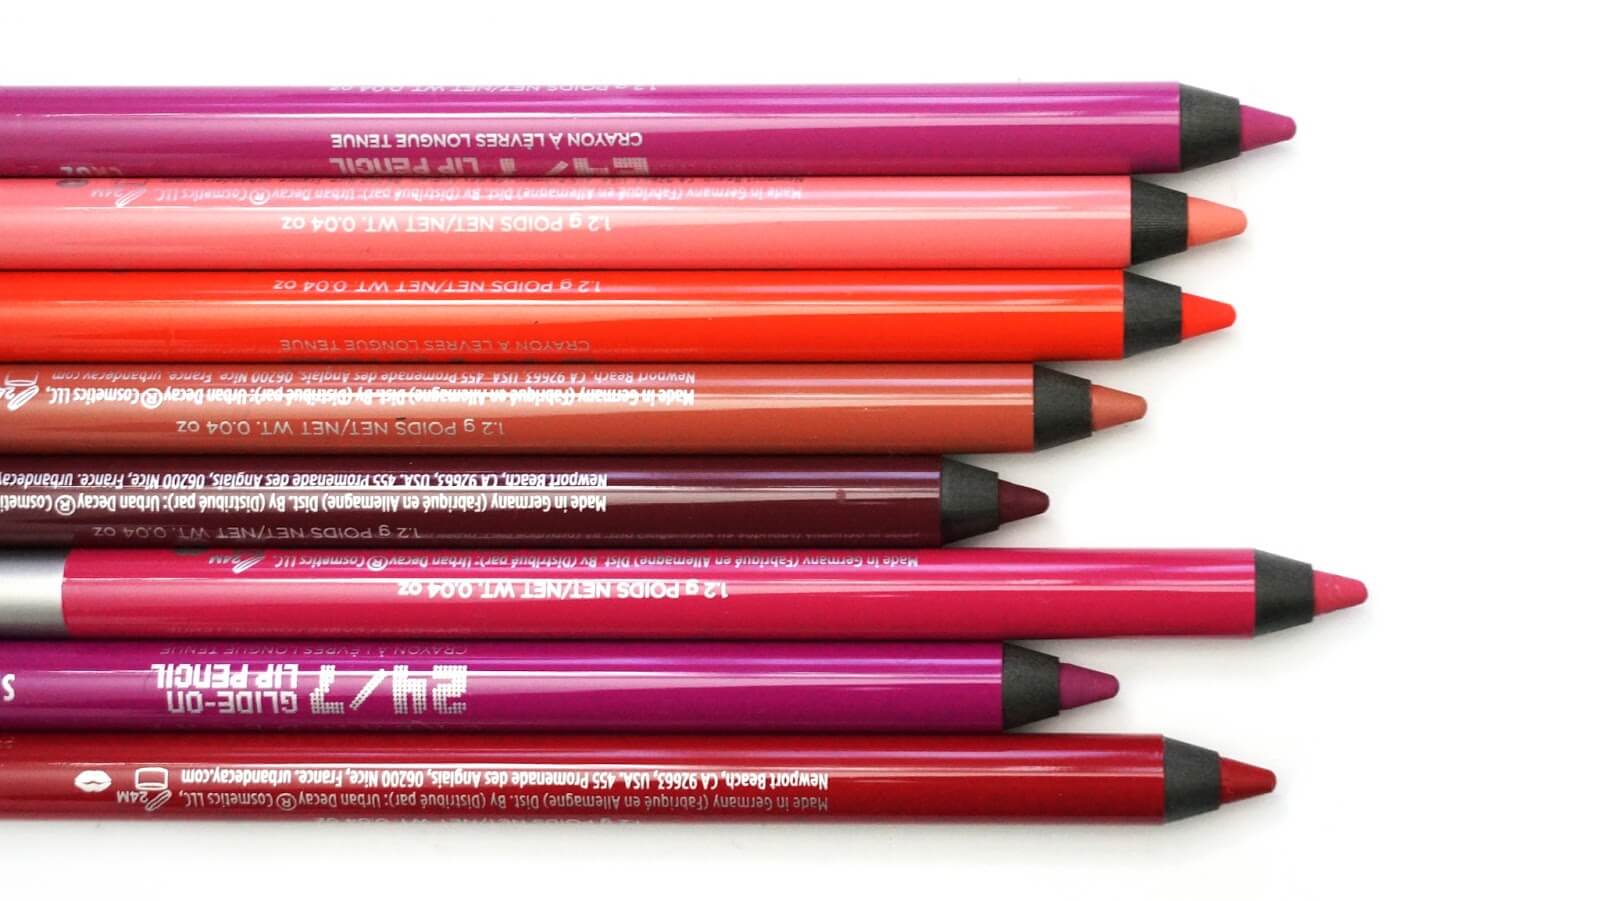 URBAN DECAY 24/7 Glide On Lip Pencil #Crash 1.2g ไอเทม 2 IN 1 เป็นได้ทั้งดินสอขอบปากและสิปสติกในแท่งเดียว สูตรกันน้ำ ติดทนตลอดวัน